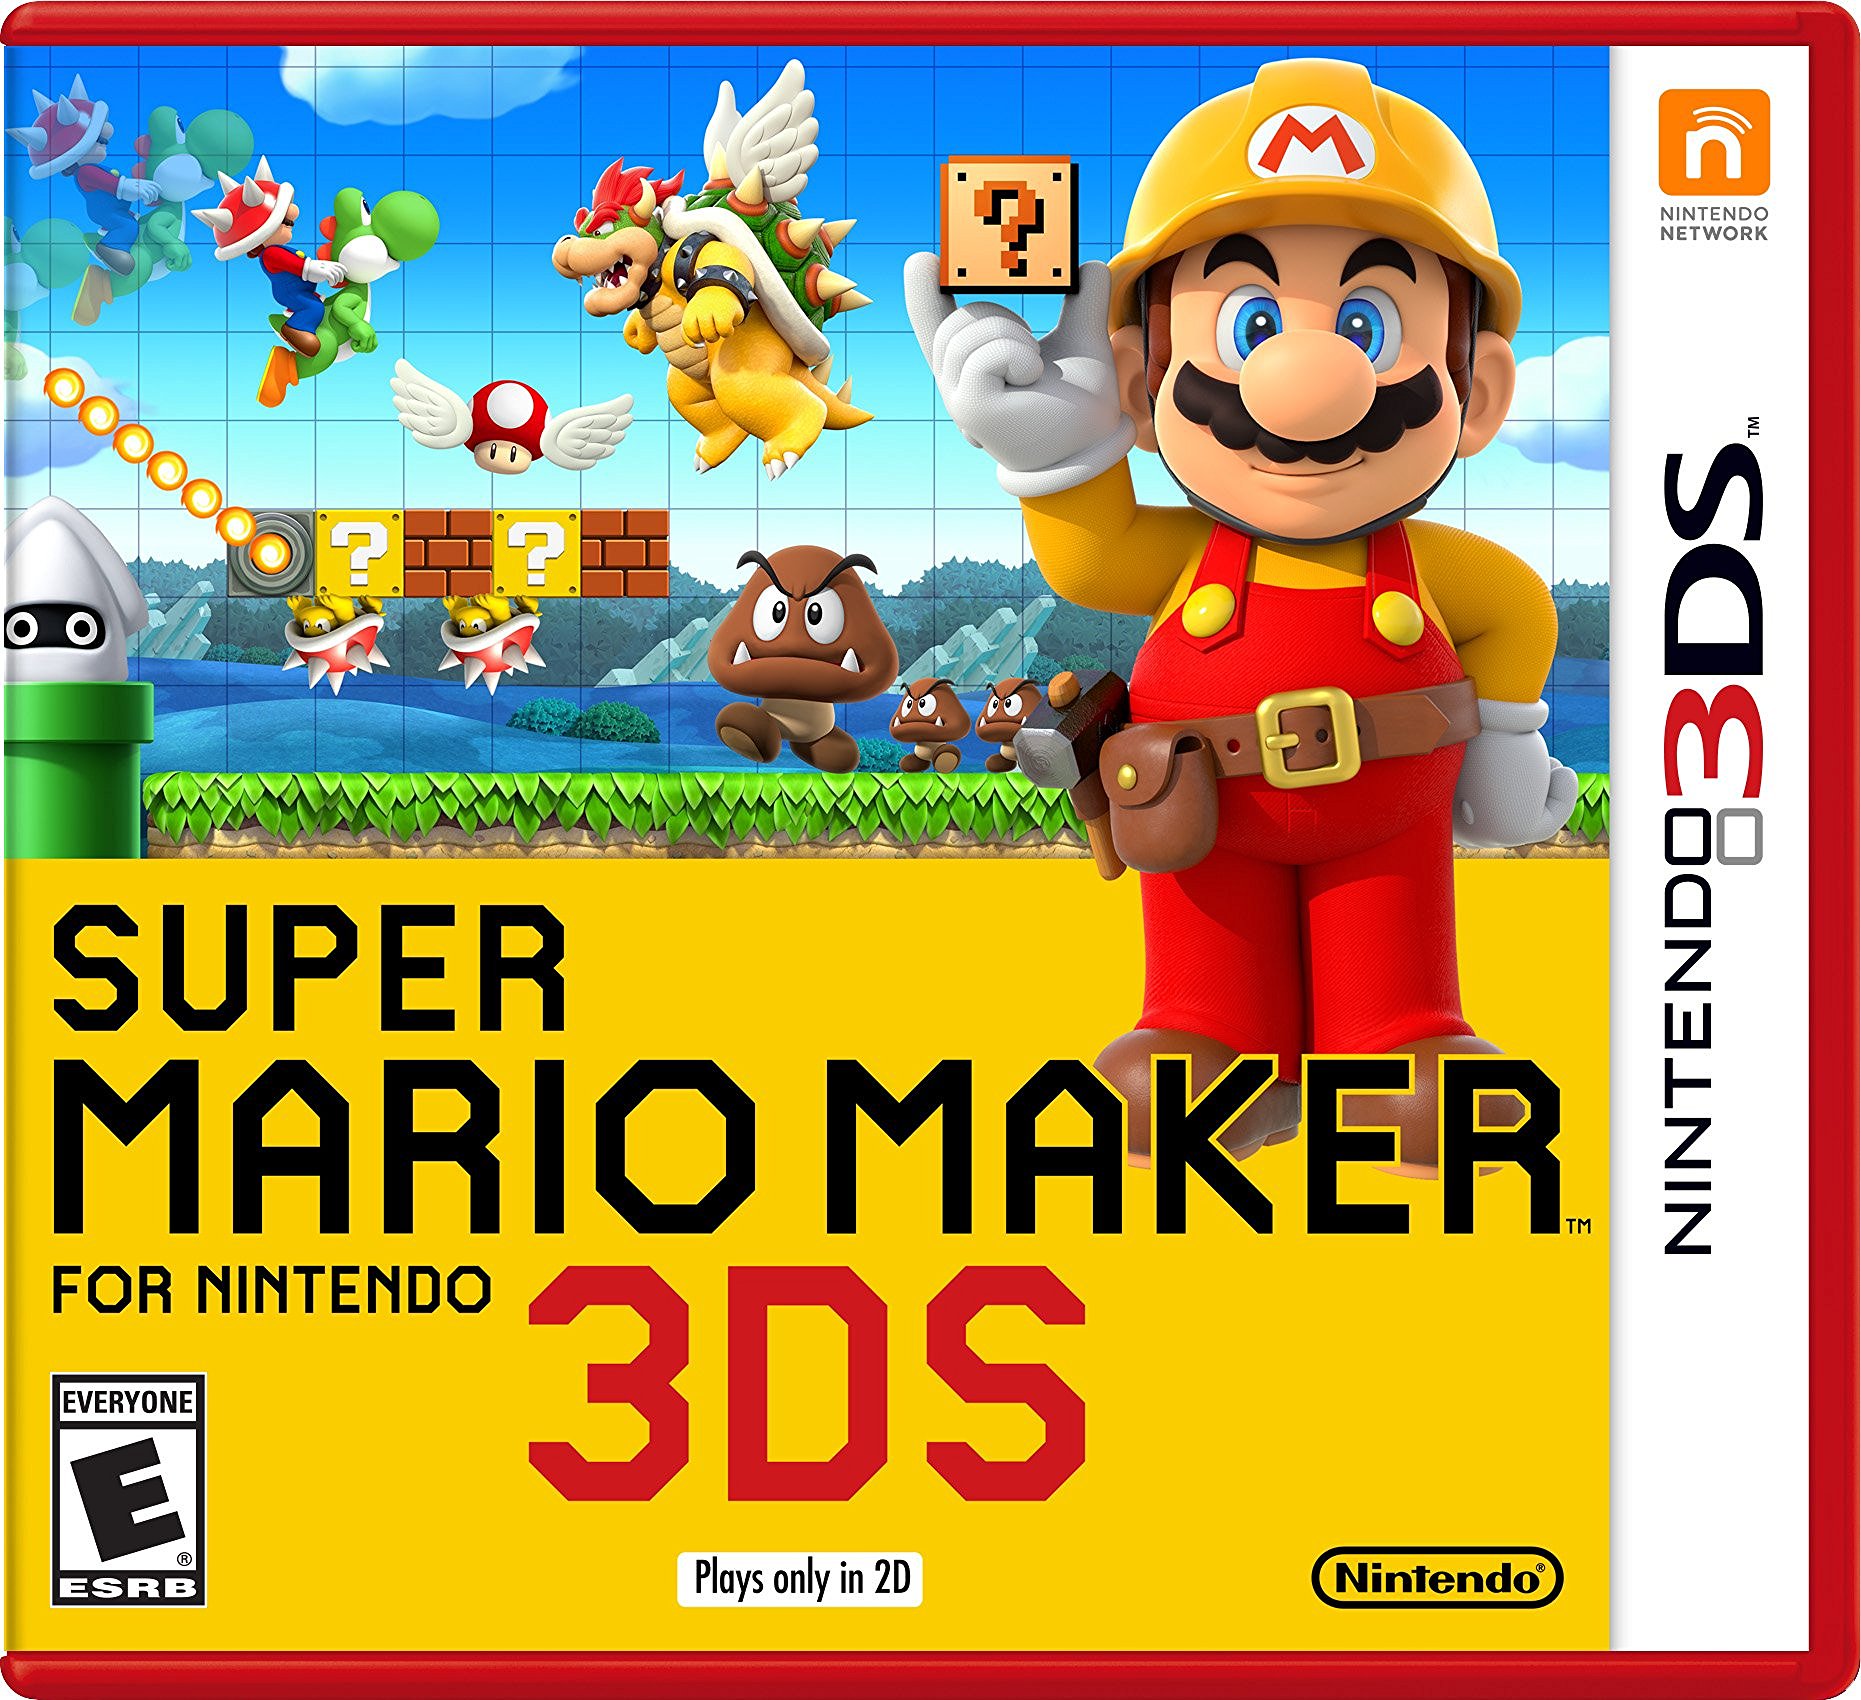 Super Mario Maker for 3DS pre-orders open - Nintendo ...